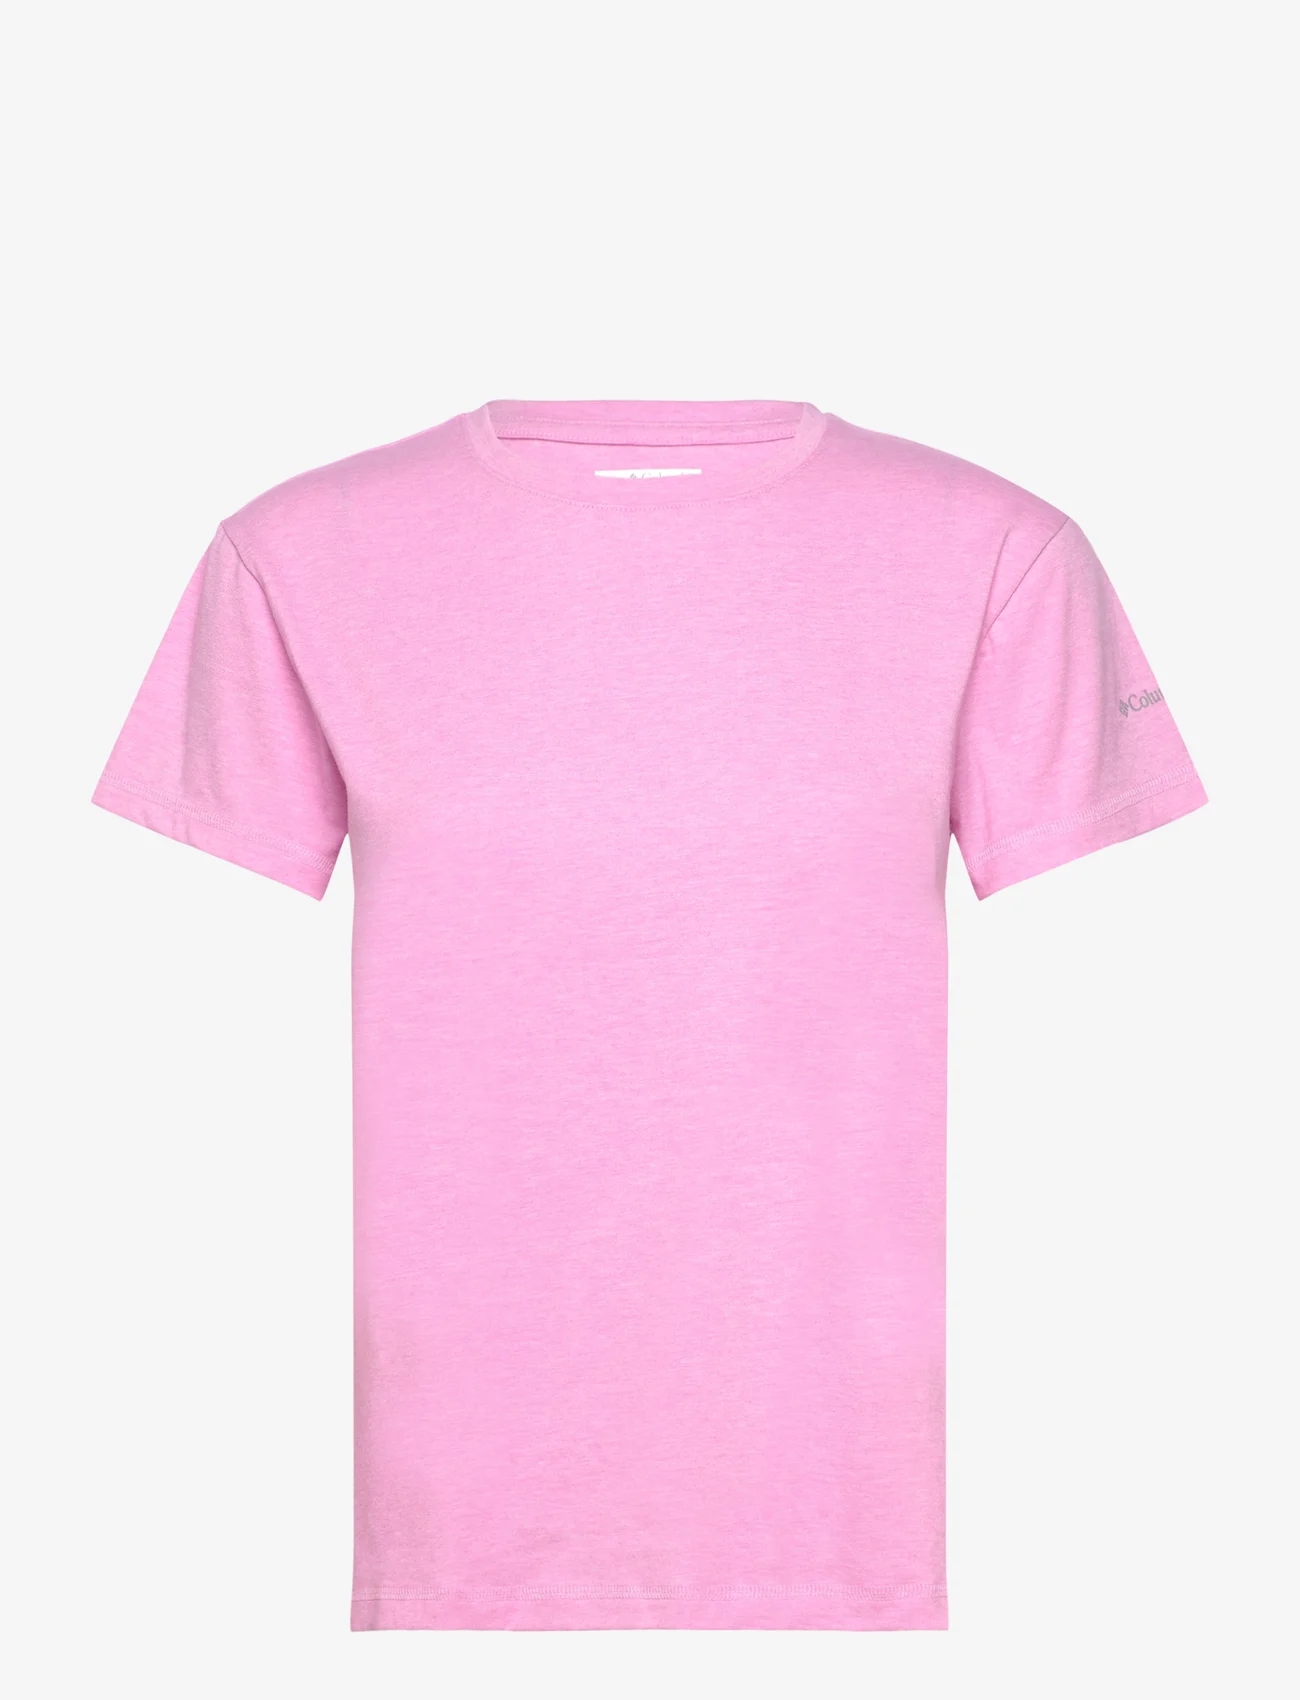 Columbia Sportswear - Sun Trek SS Tee - t-shirts - cosmos heather - 0